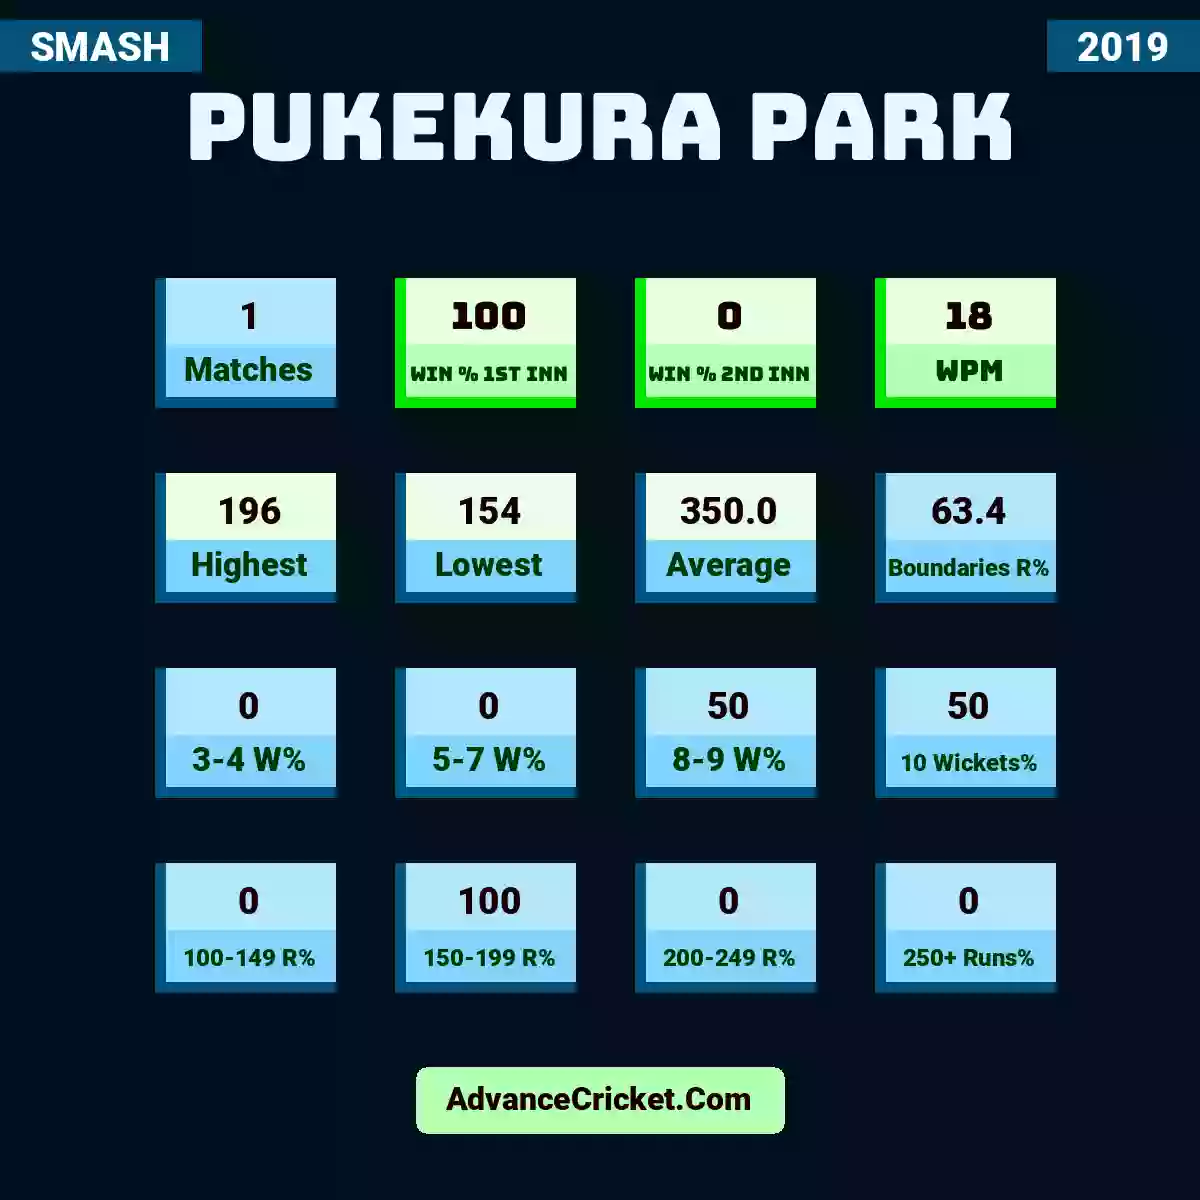 Image showing Pukekura Park with Matches: 1, Win % 1st Inn: 100, Win % 2nd Inn: 0, WPM: 18, Highest: 196, Lowest: 154, Average: 350.0, Boundaries R%: 63.4, 3-4 W%: 0, 5-7 W%: 0, 8-9 W%: 50, 10 Wickets%: 50, 100-149 R%: 0, 150-199 R%: 100, 200-249 R%: 0, 250+ Runs%: 0.